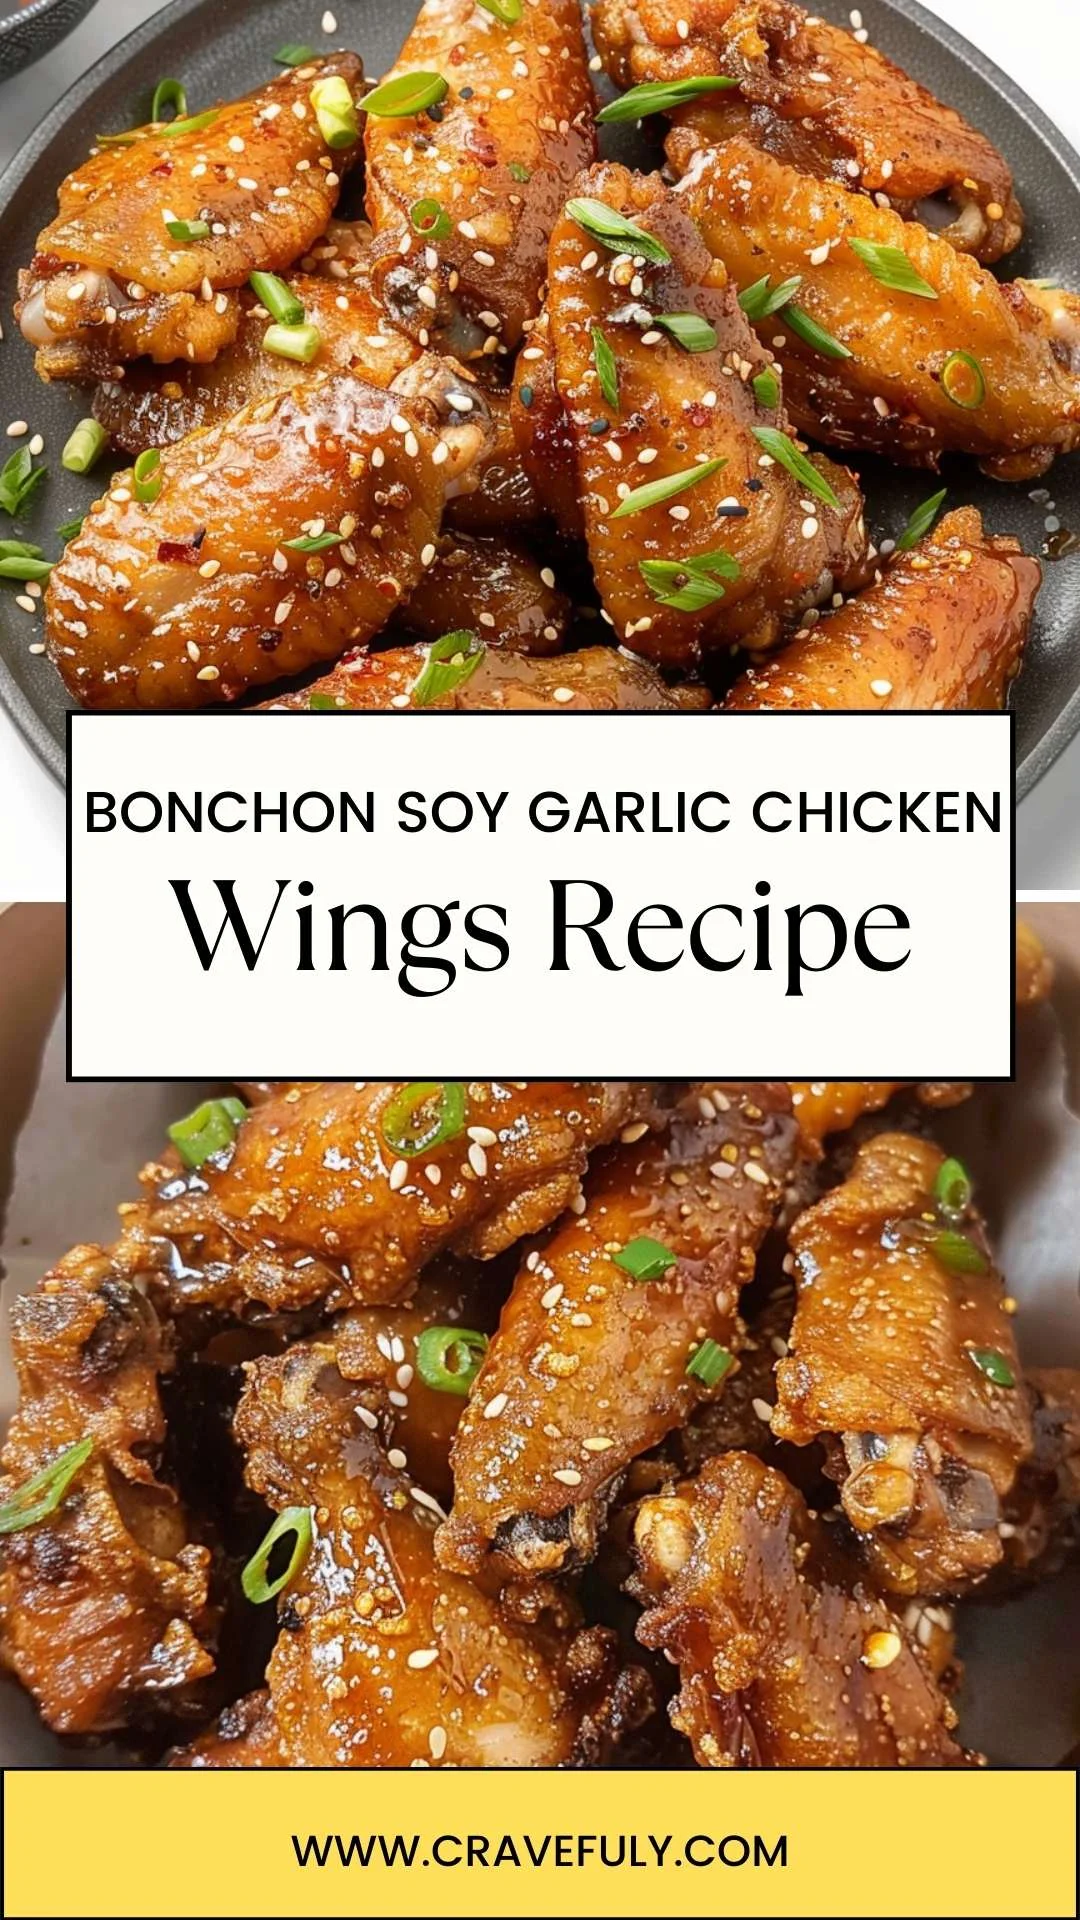 Bonchon Soy Garlic Chicken Wings Recipe